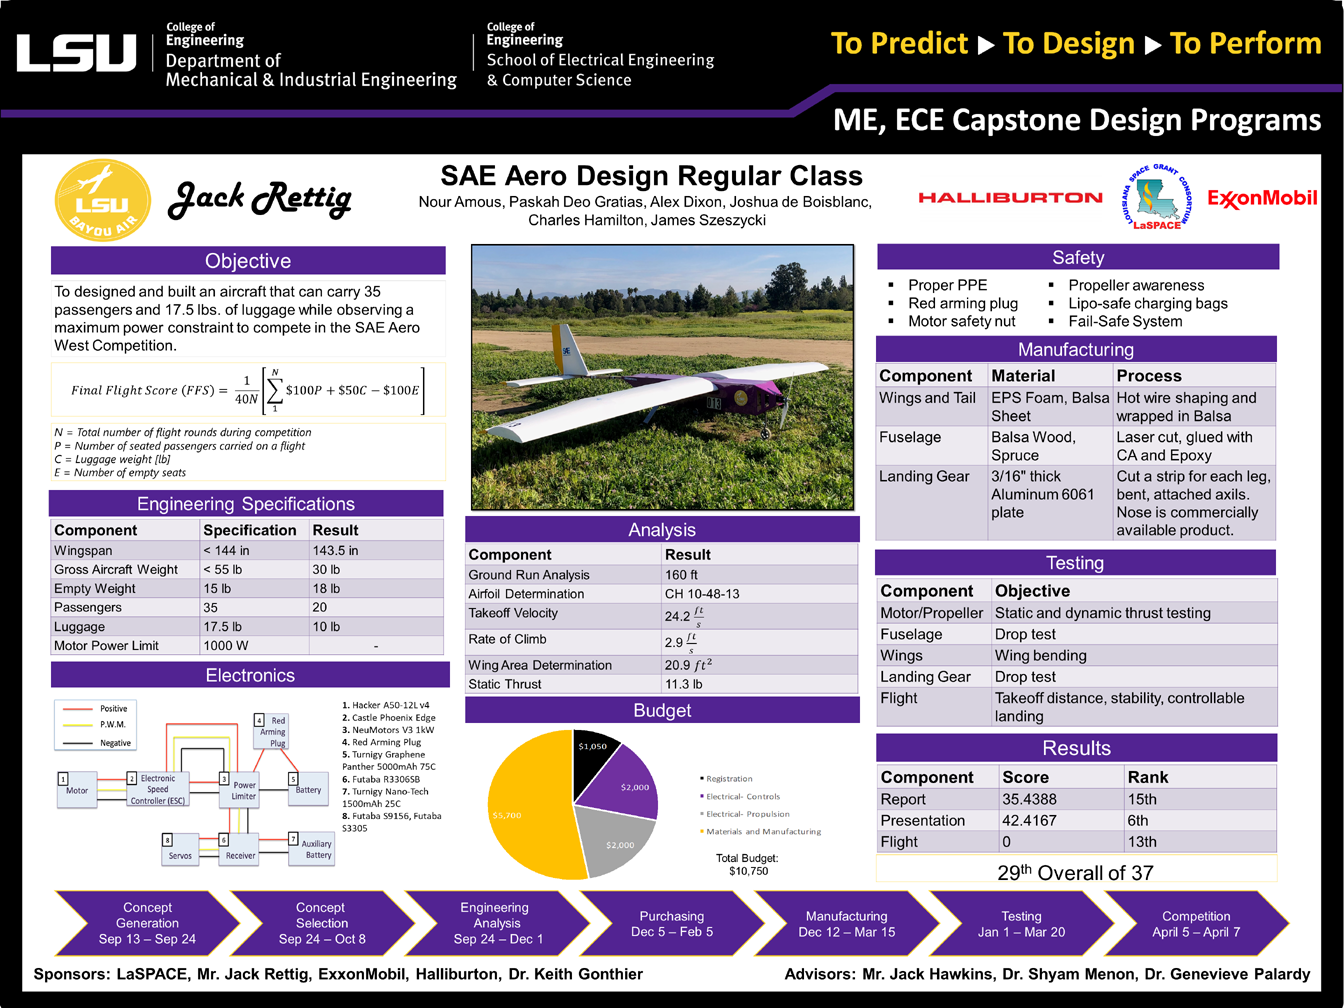 Project 25: SAE Aero Design (Regular Class) (2019)